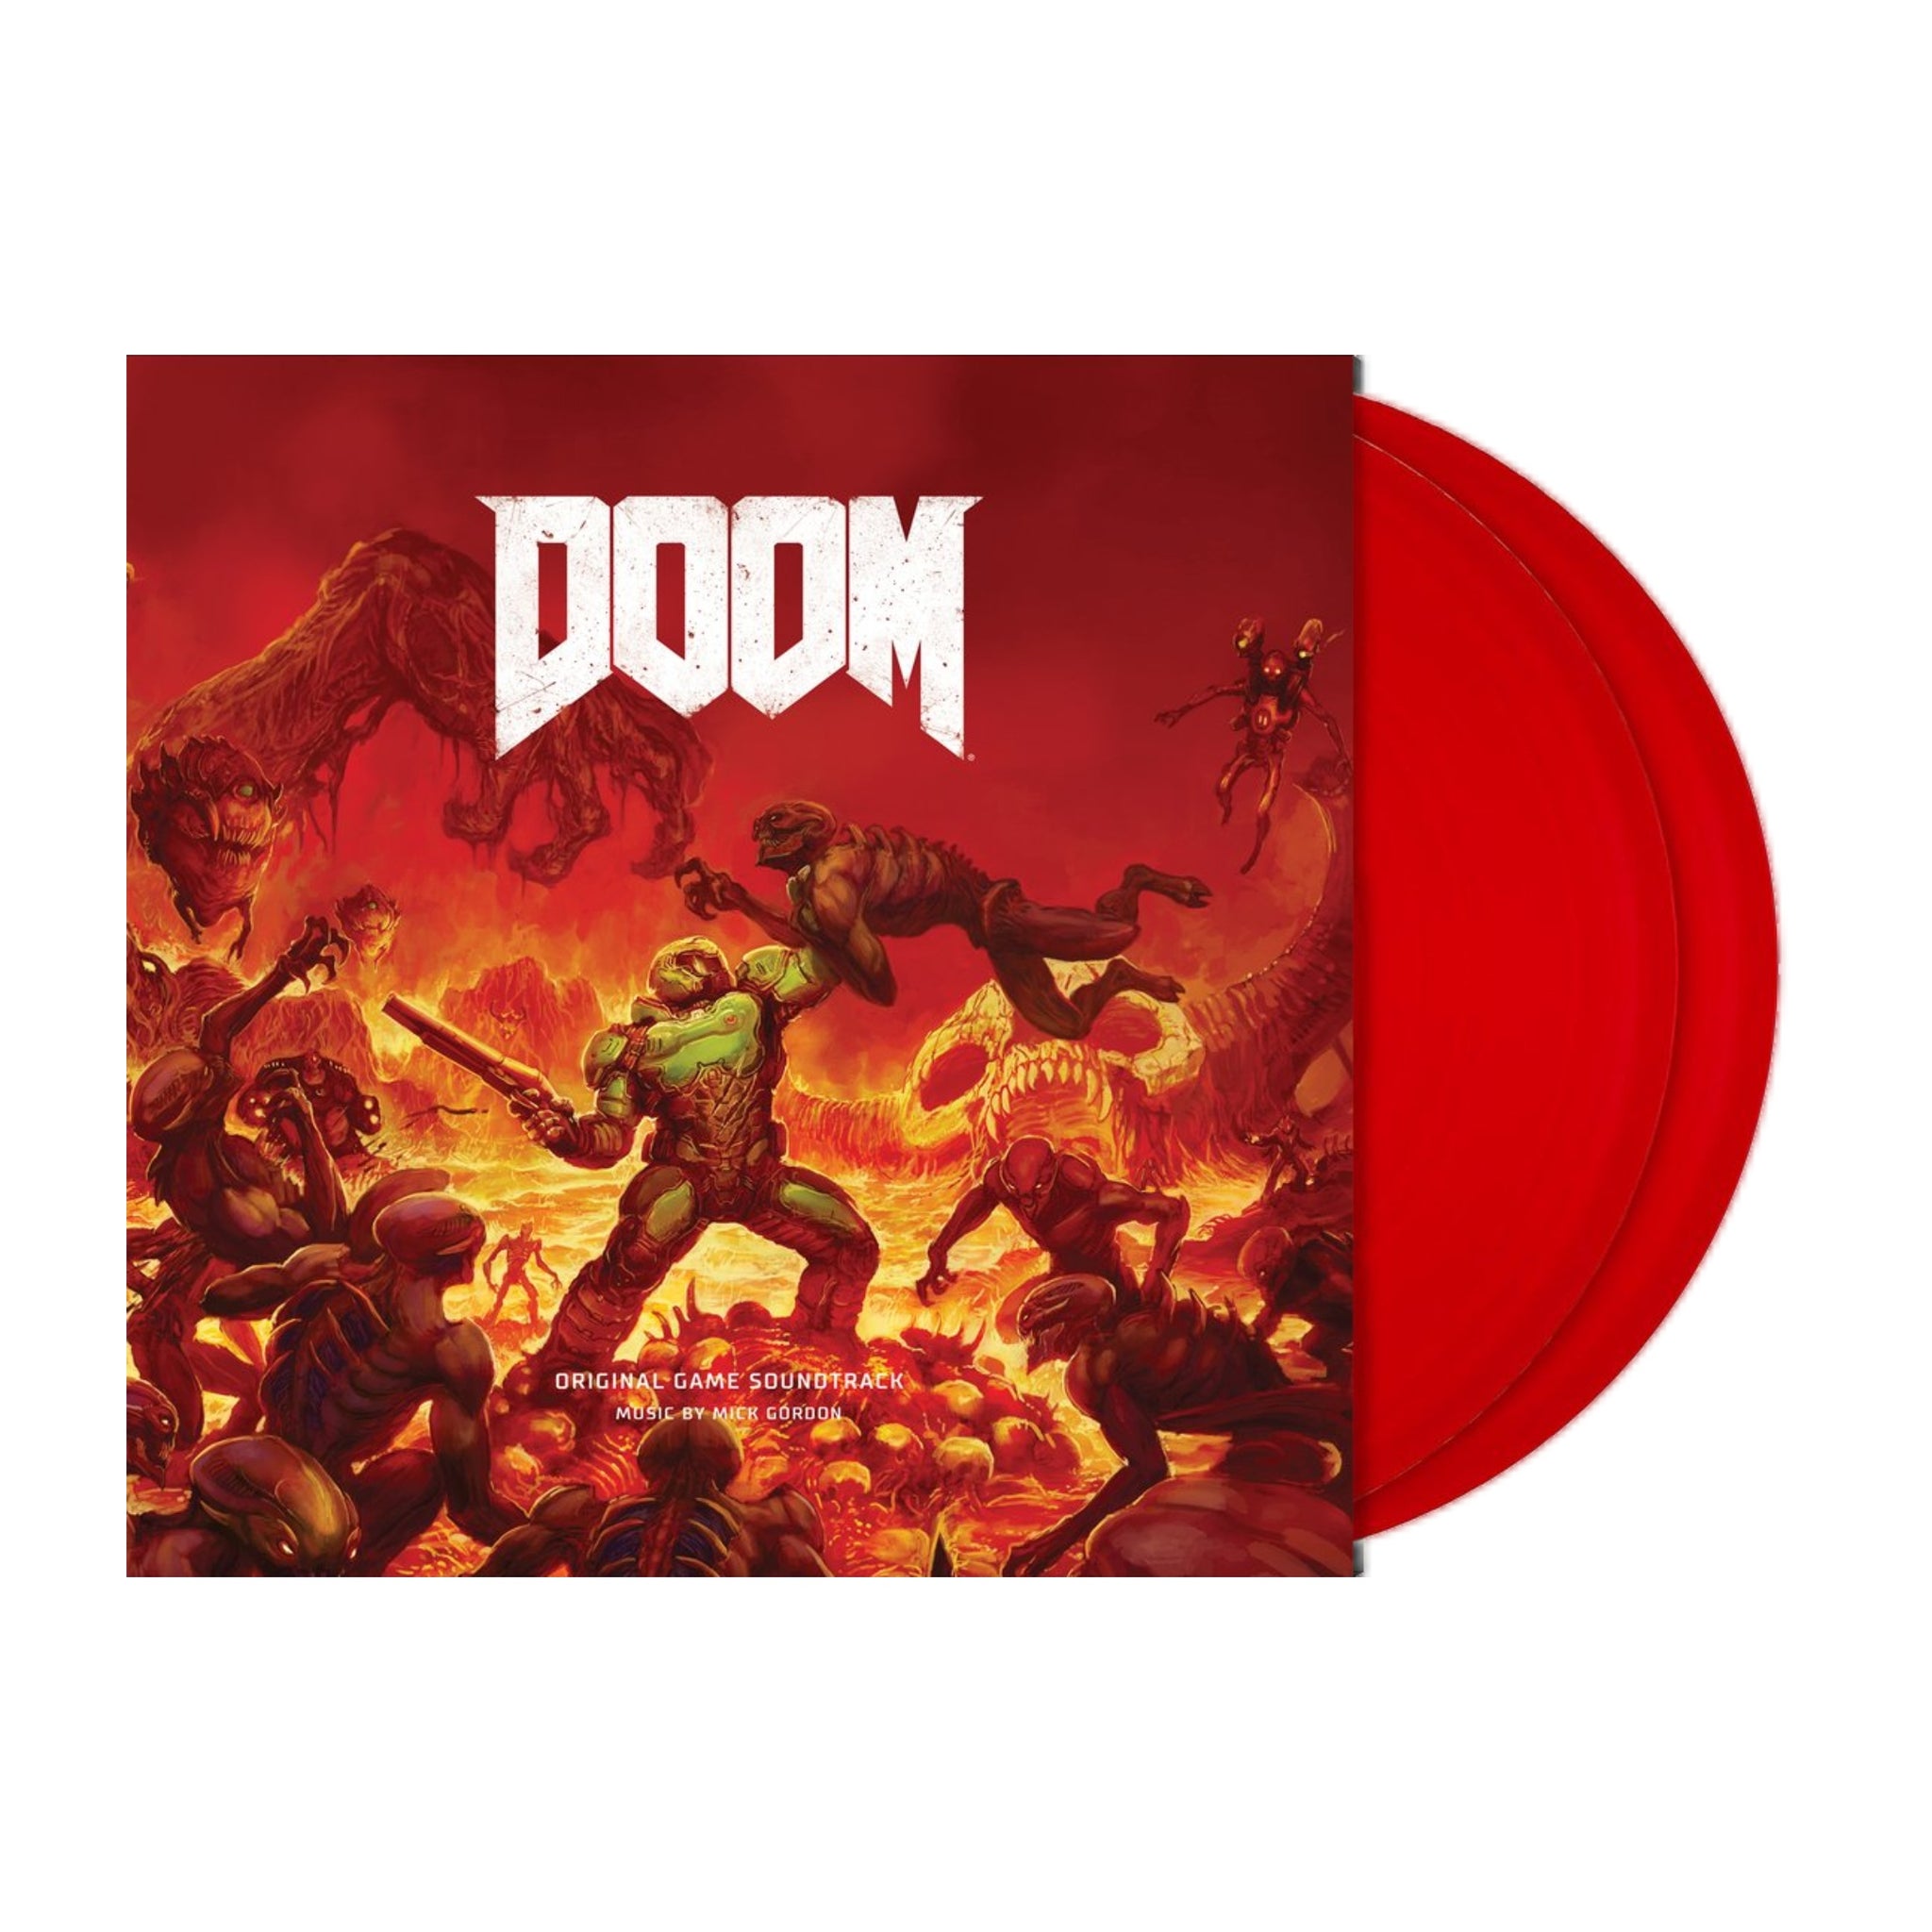 Mick Gordon - Doom Original Game Soundtrack 2xLP (Red Vinyl)